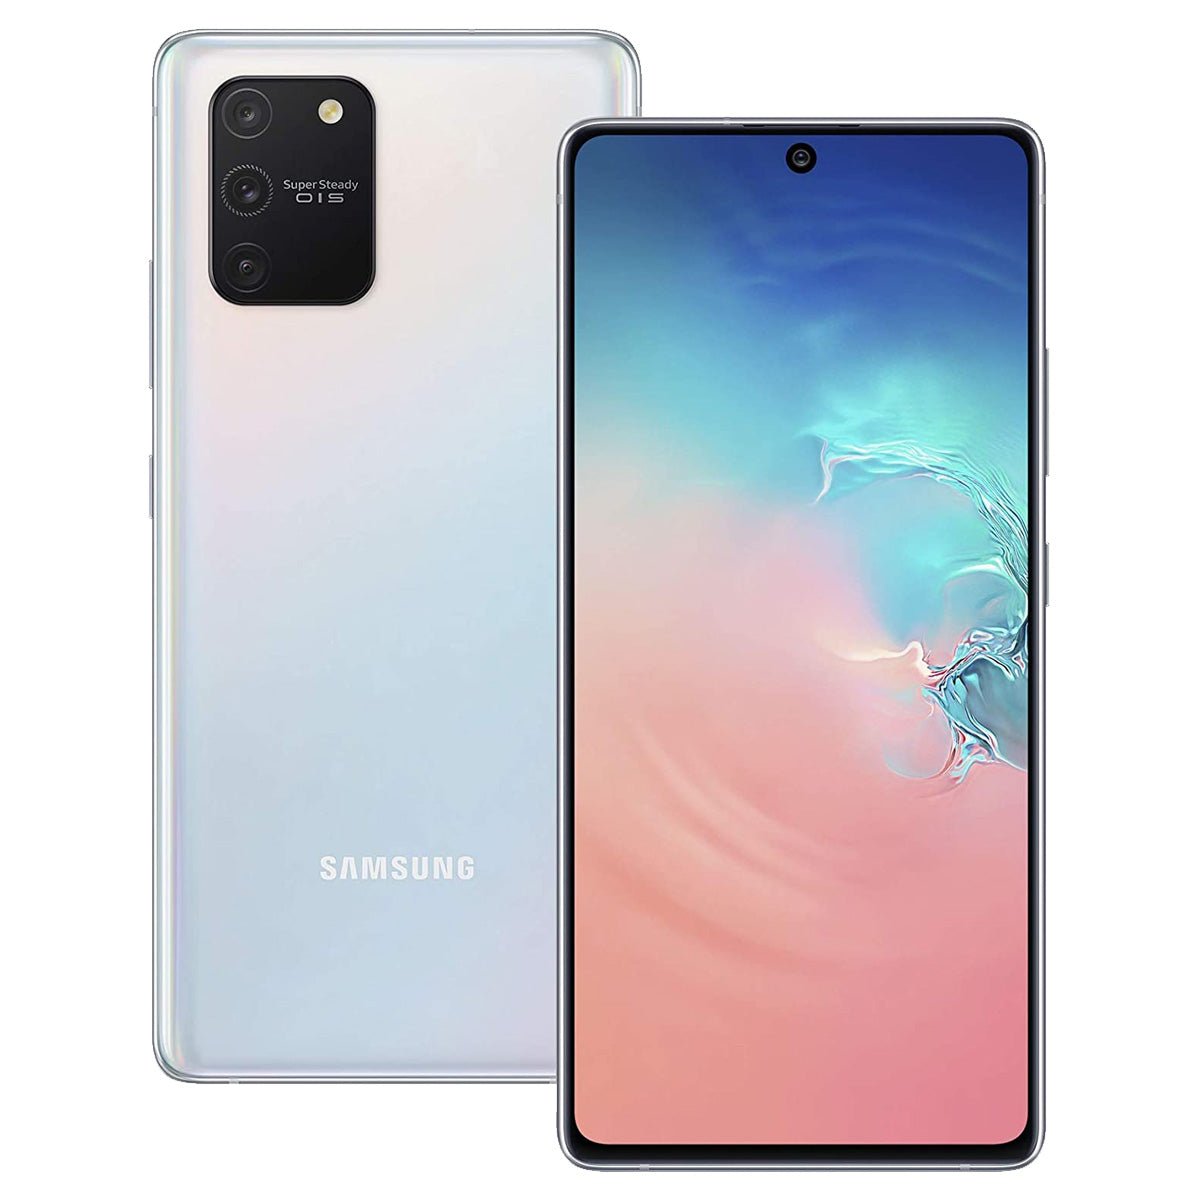 Samsung Galaxy S10 Lite GOOD Condition Unlocked Smartphone - RueZone Smartphone Prism White 128GB